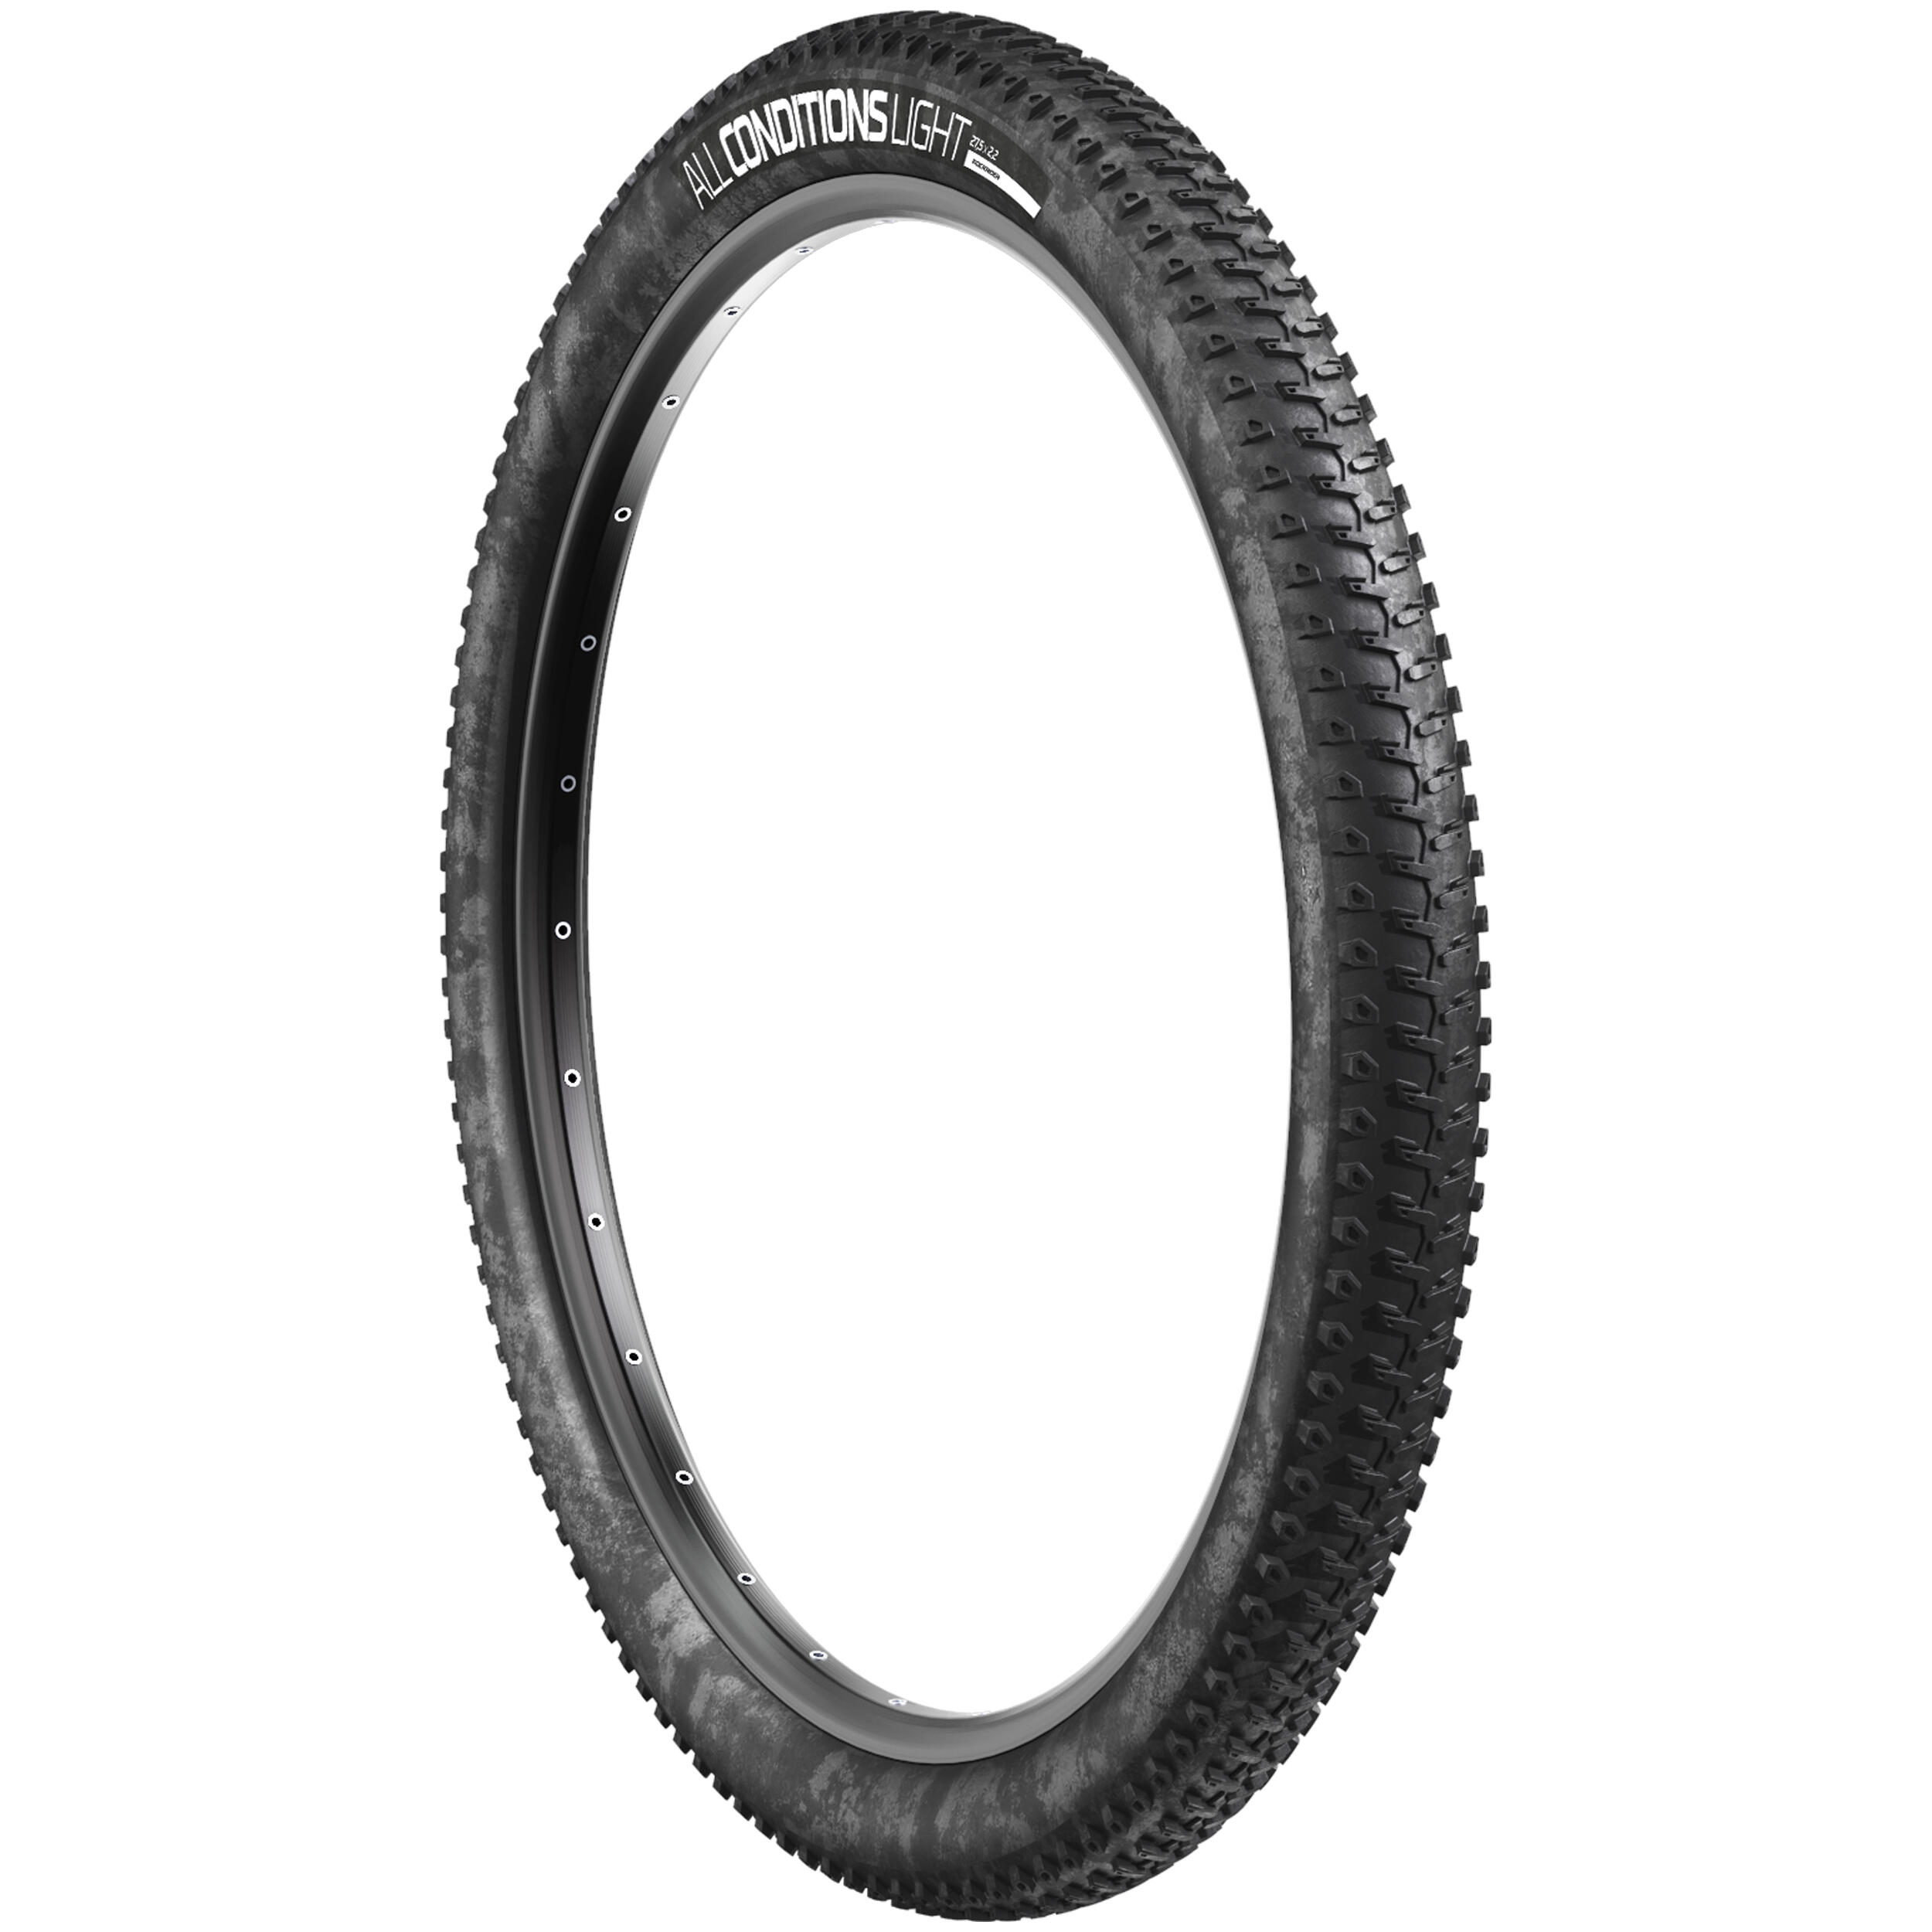 All-Weather Stiff Bead Tire 27.5 x 2.20  - ROCKRIDER